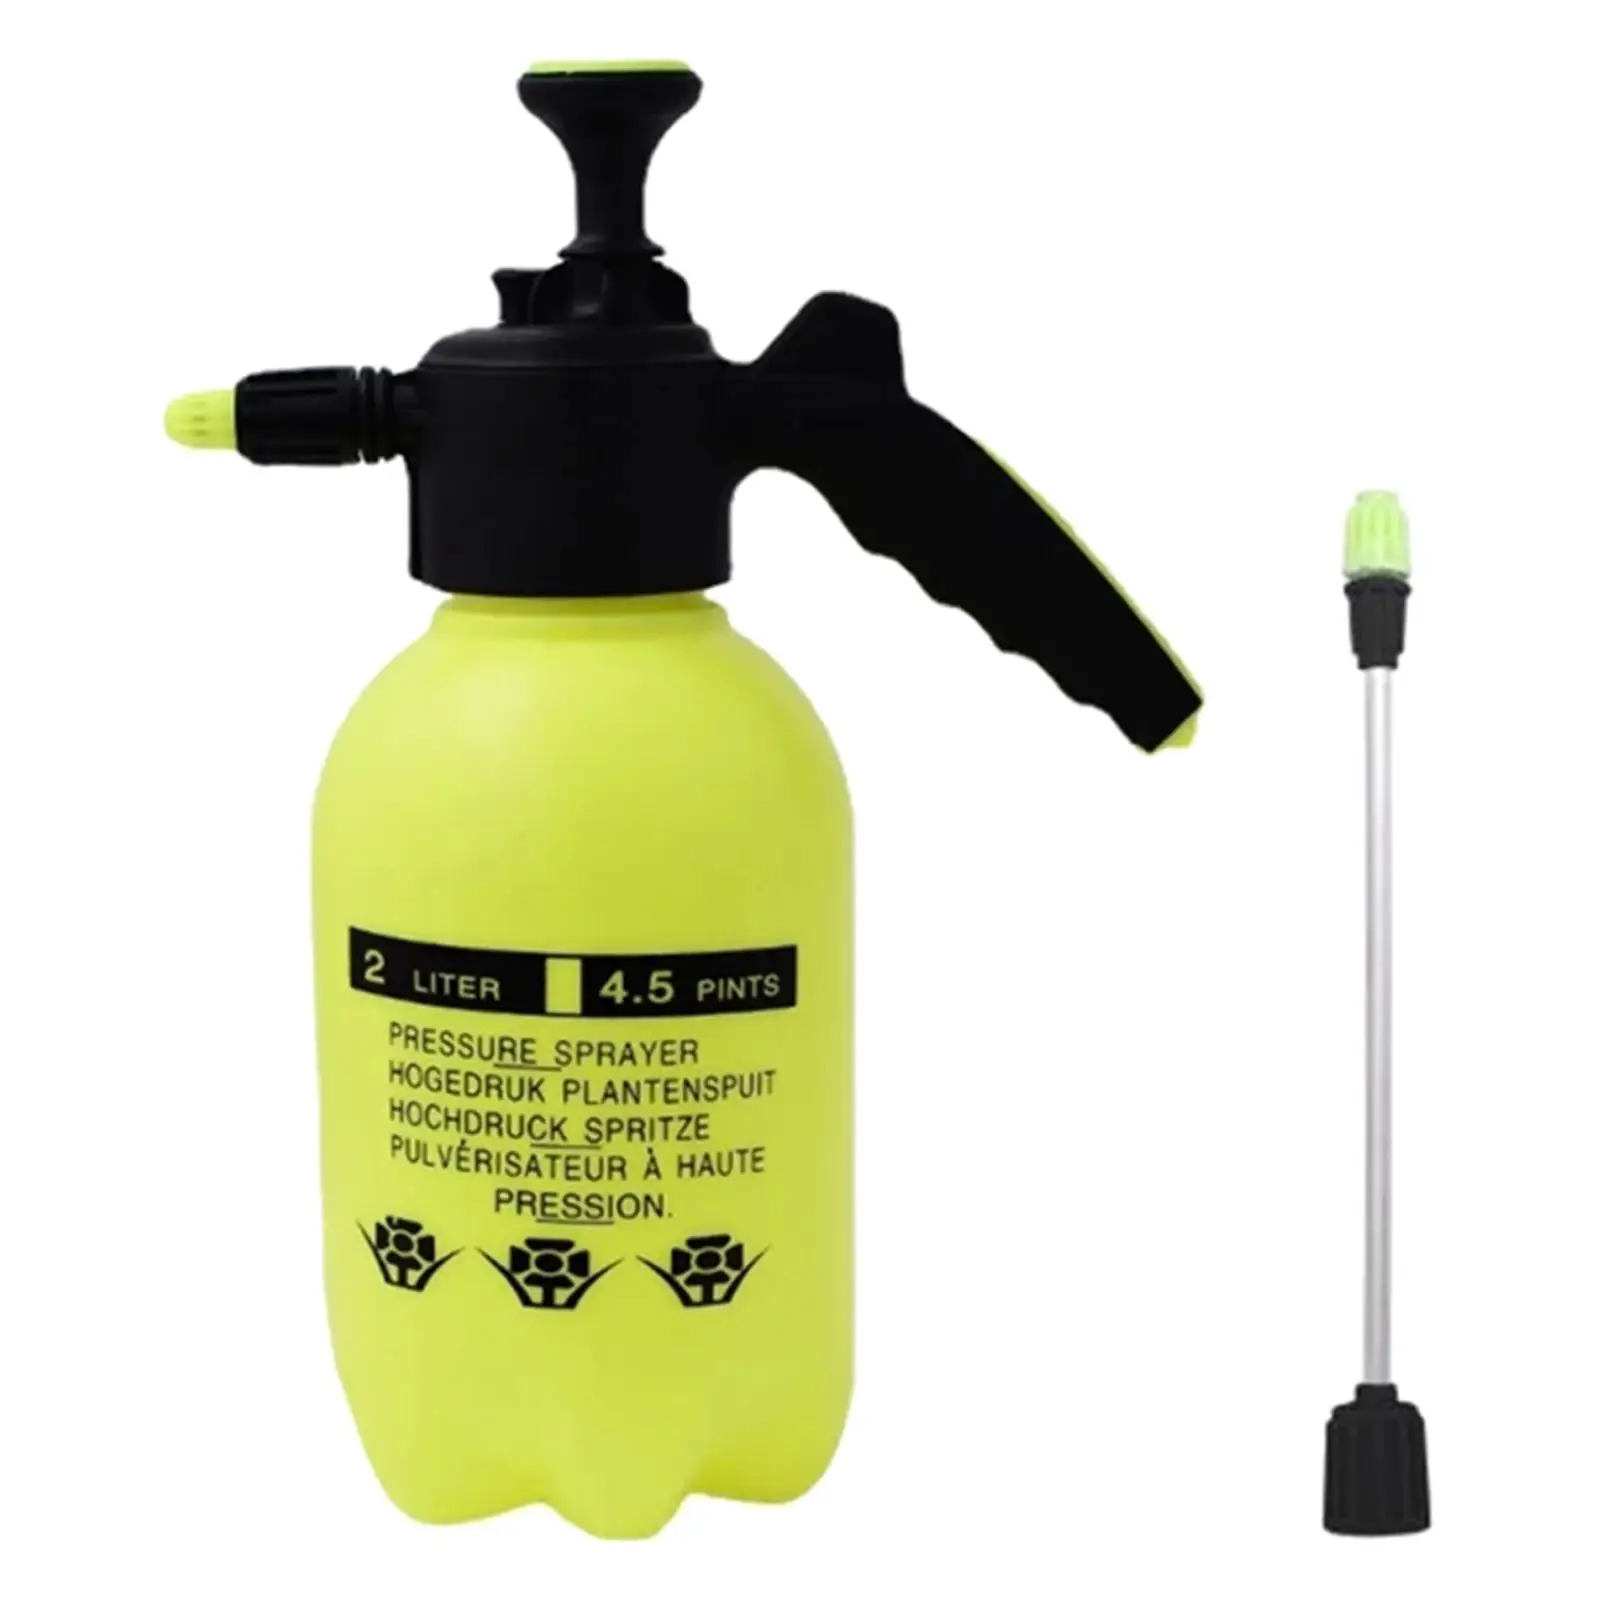 Multipurpose Garden Pump Sprayer with Adjustable Nozzle Pressure Sprayer Bottle for Gardening Cleaning Windows Watering